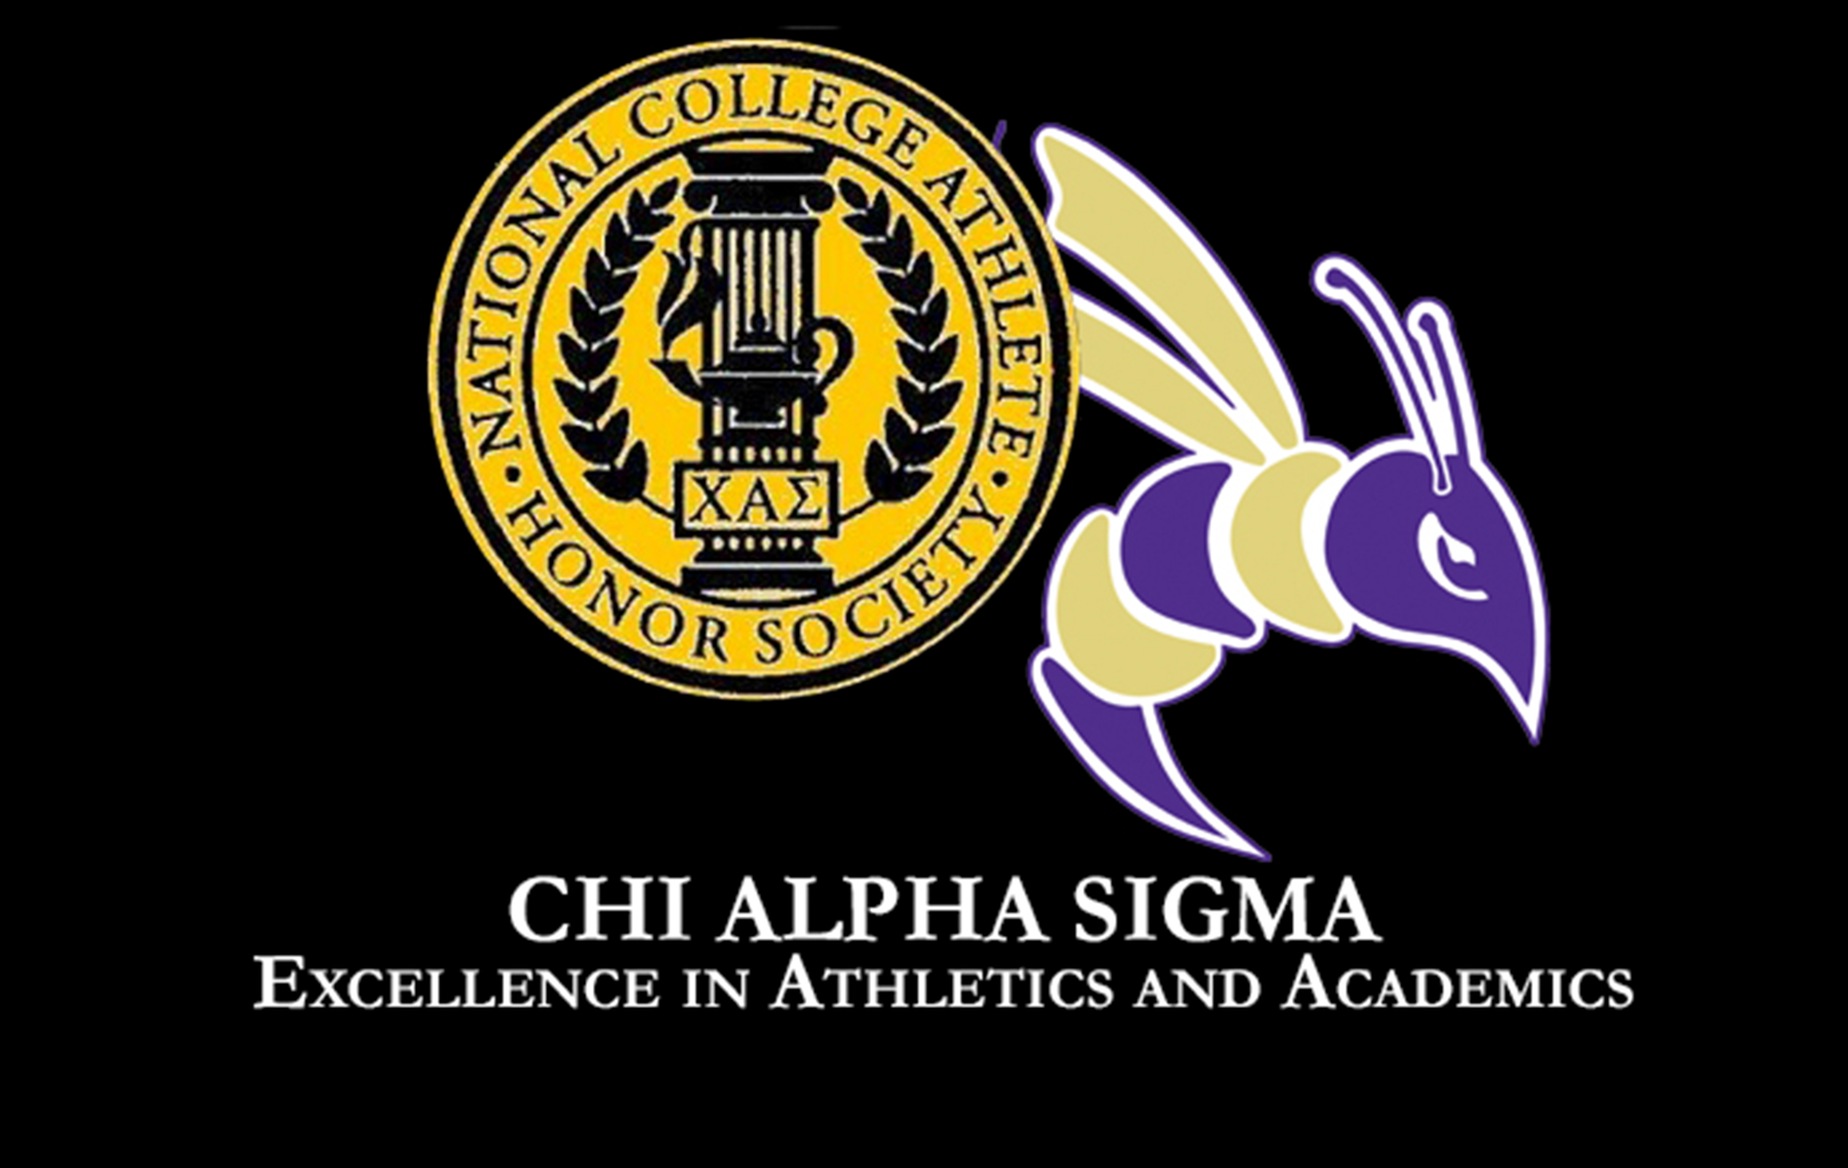 DC Has 31 Athletes Named to Chi Alpha Sigma Honor Society